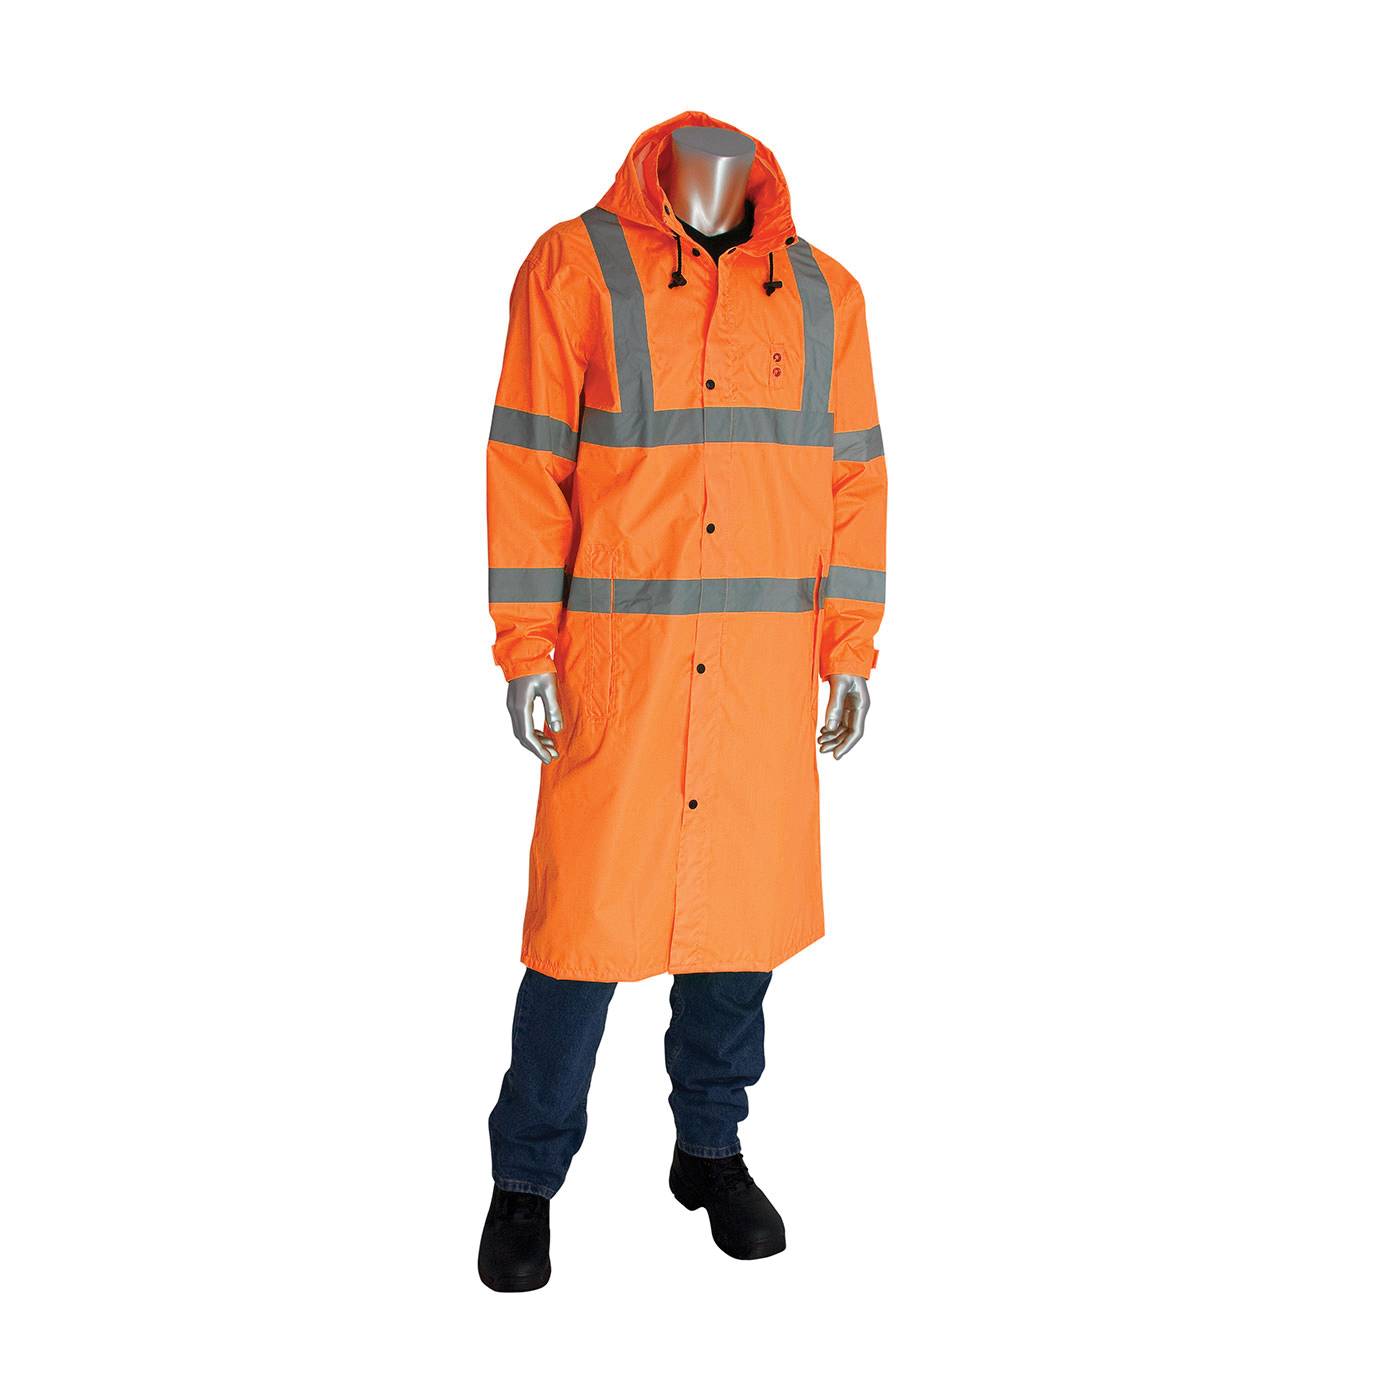 PIP® FALCON™ Viz™ 353-1048-OR/4X All Purpose Waterproof Rain Coat, 4XL, Hi-Viz Orange, 150D Polyester Coated with Polyurethane, Resists: Water, ANSI 107 Type R Class 3, Concealed Hood